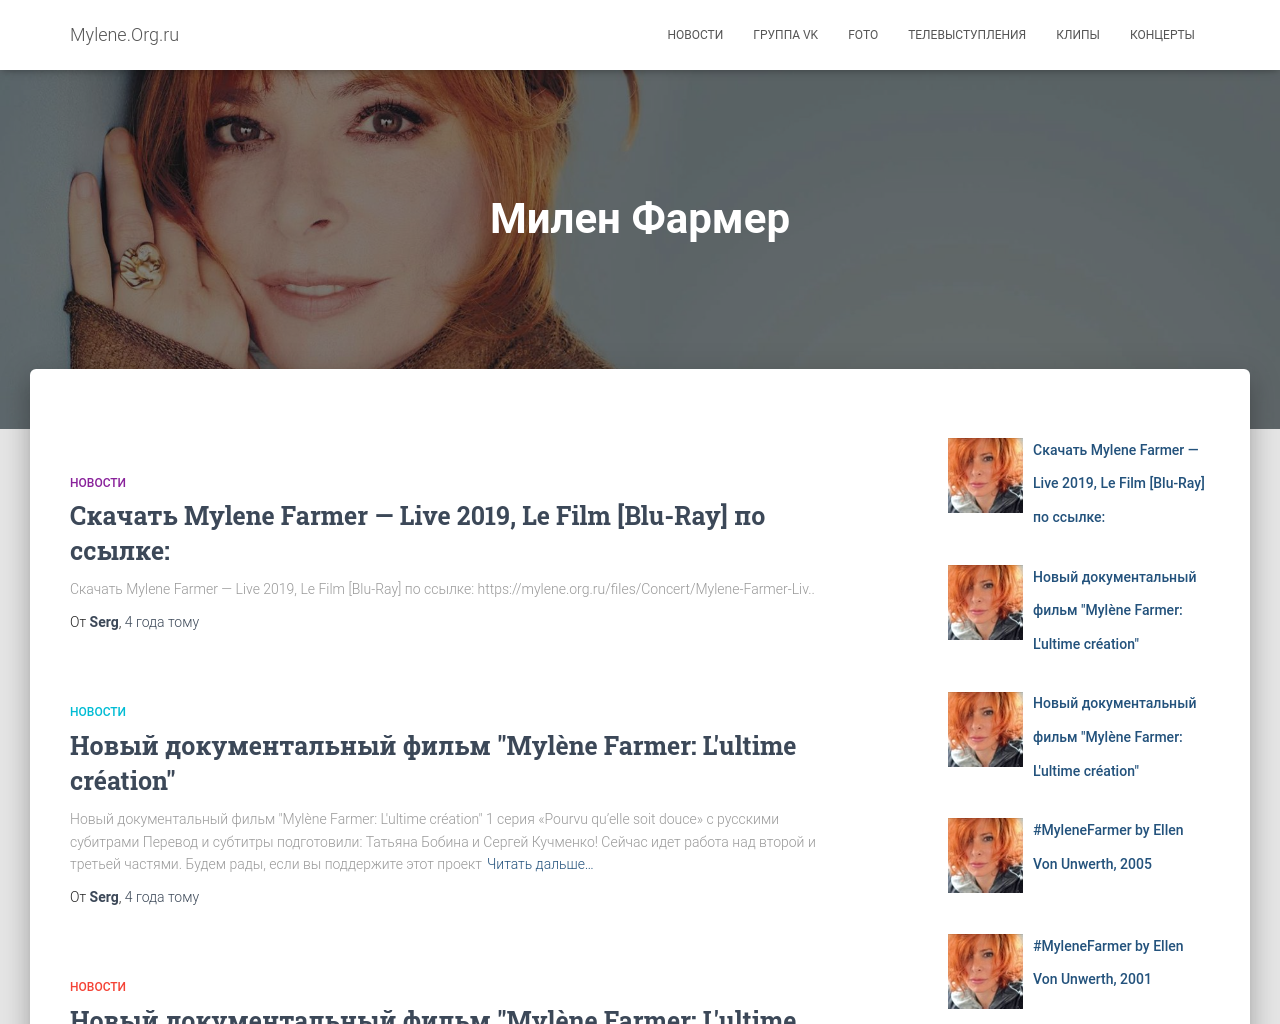 mylene.org.ru